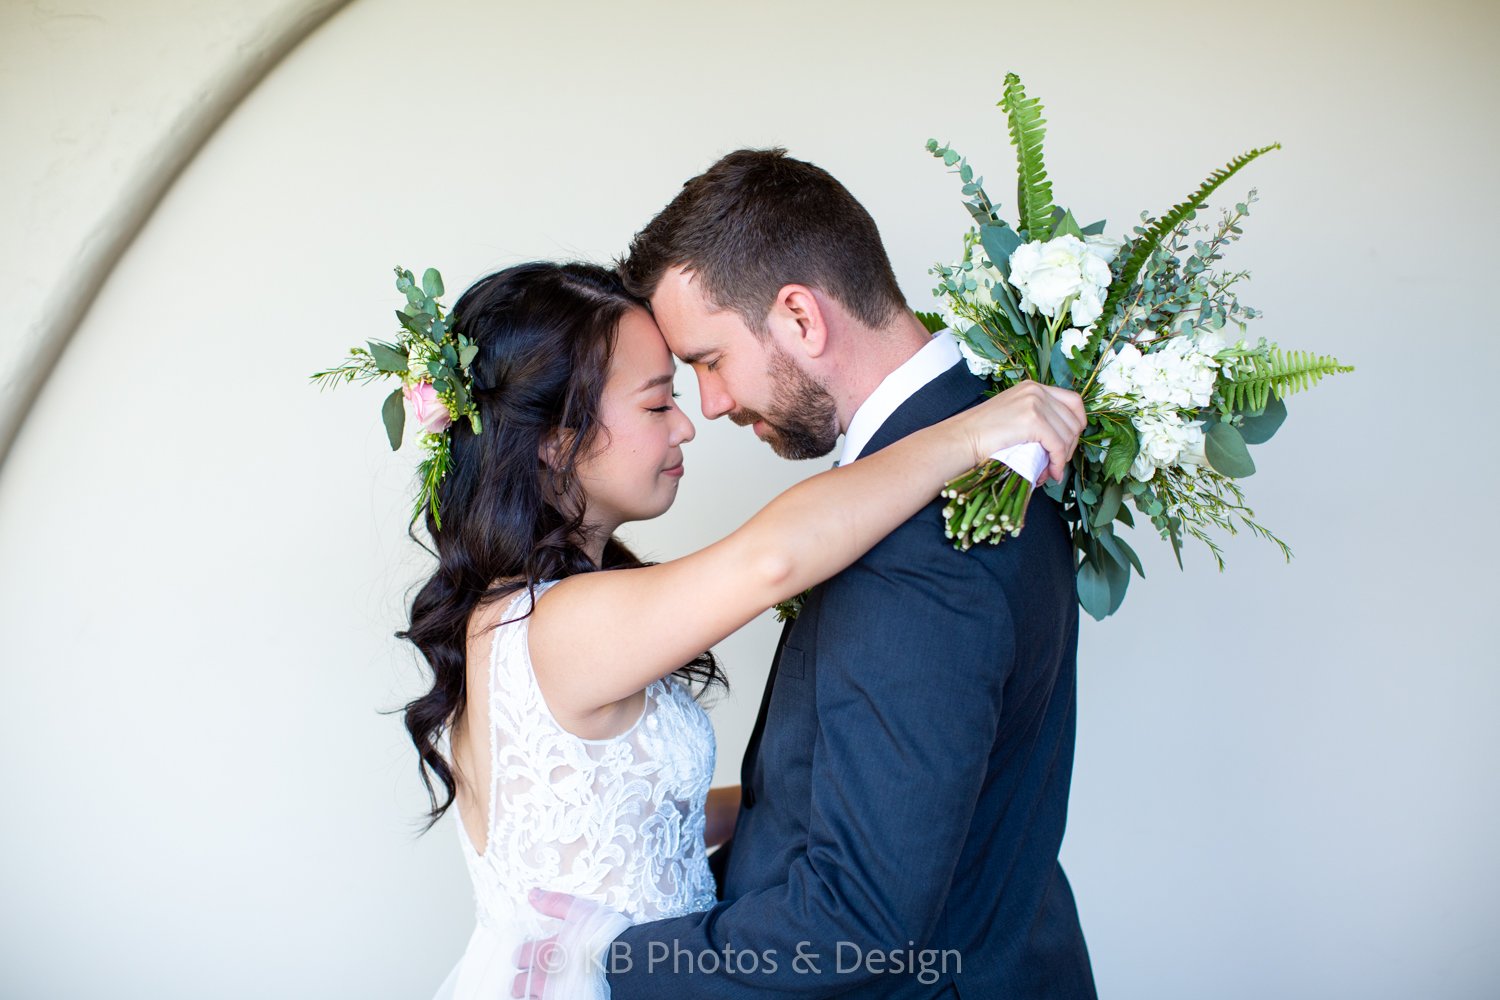 Wedding-Destination-Photography-Lake-of-the-Ozarks-Missouri-Wade-Natsuko-Jefferson-City-bride-groom-Lodge-of-Four-Seasons-wedding-photographer-KB-Photos-and-Design-104.jpg